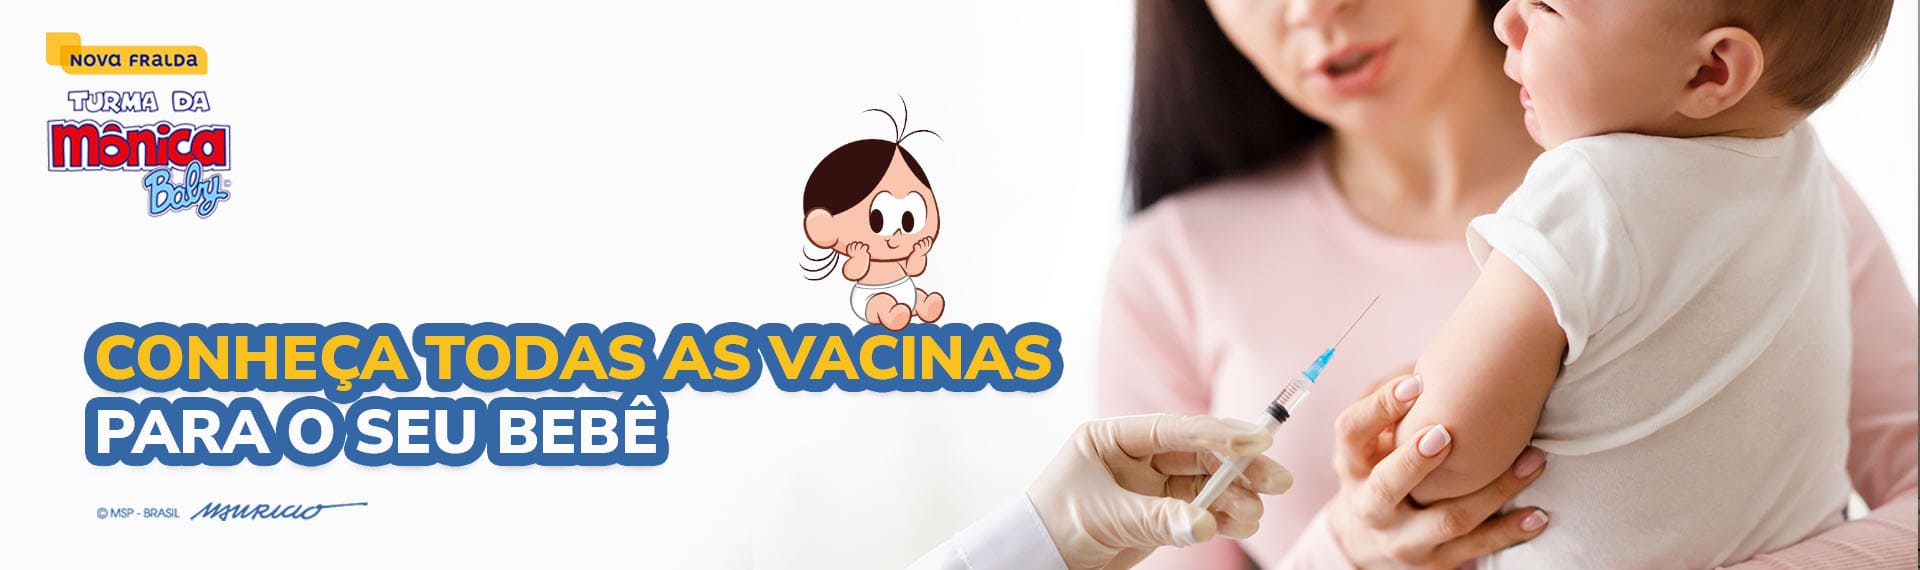 Todas as vacinas para bebê